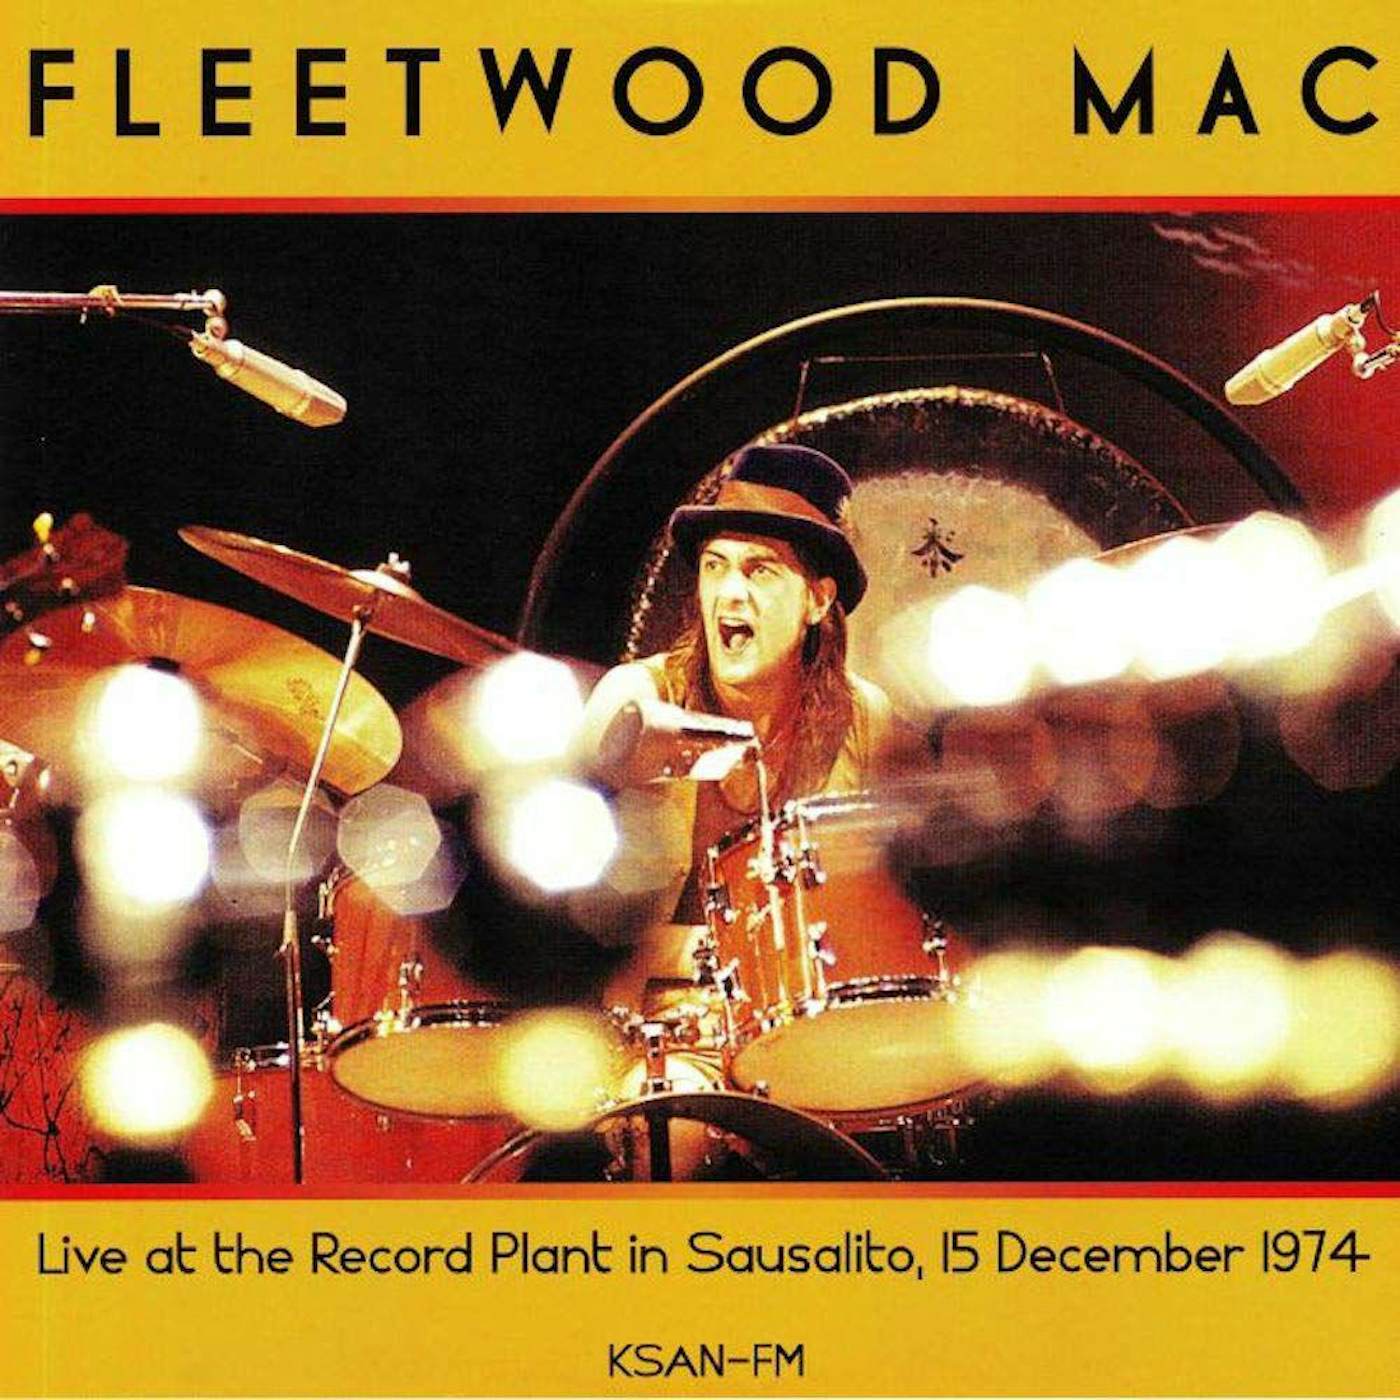 Fleetwood Mac Live At The Record Plant In Suasalito, 12/15/74 KSAN vinyl record